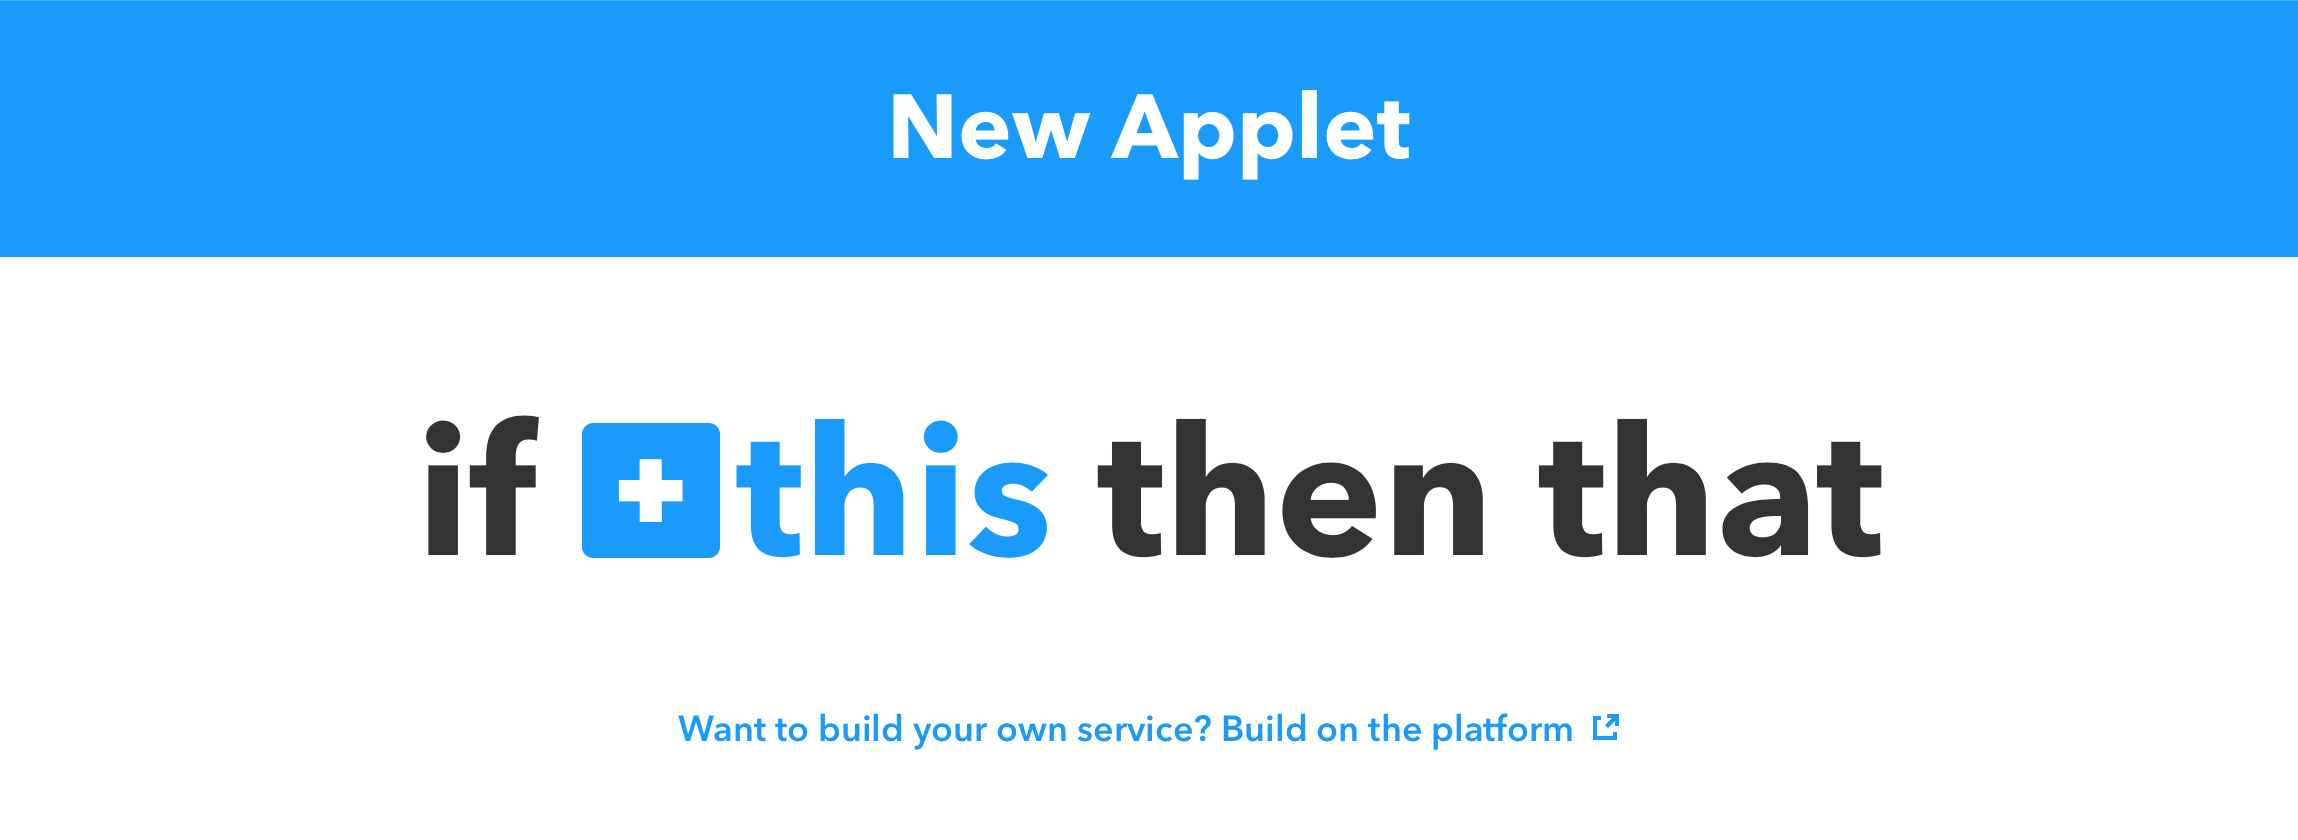 IFTTT New Applet